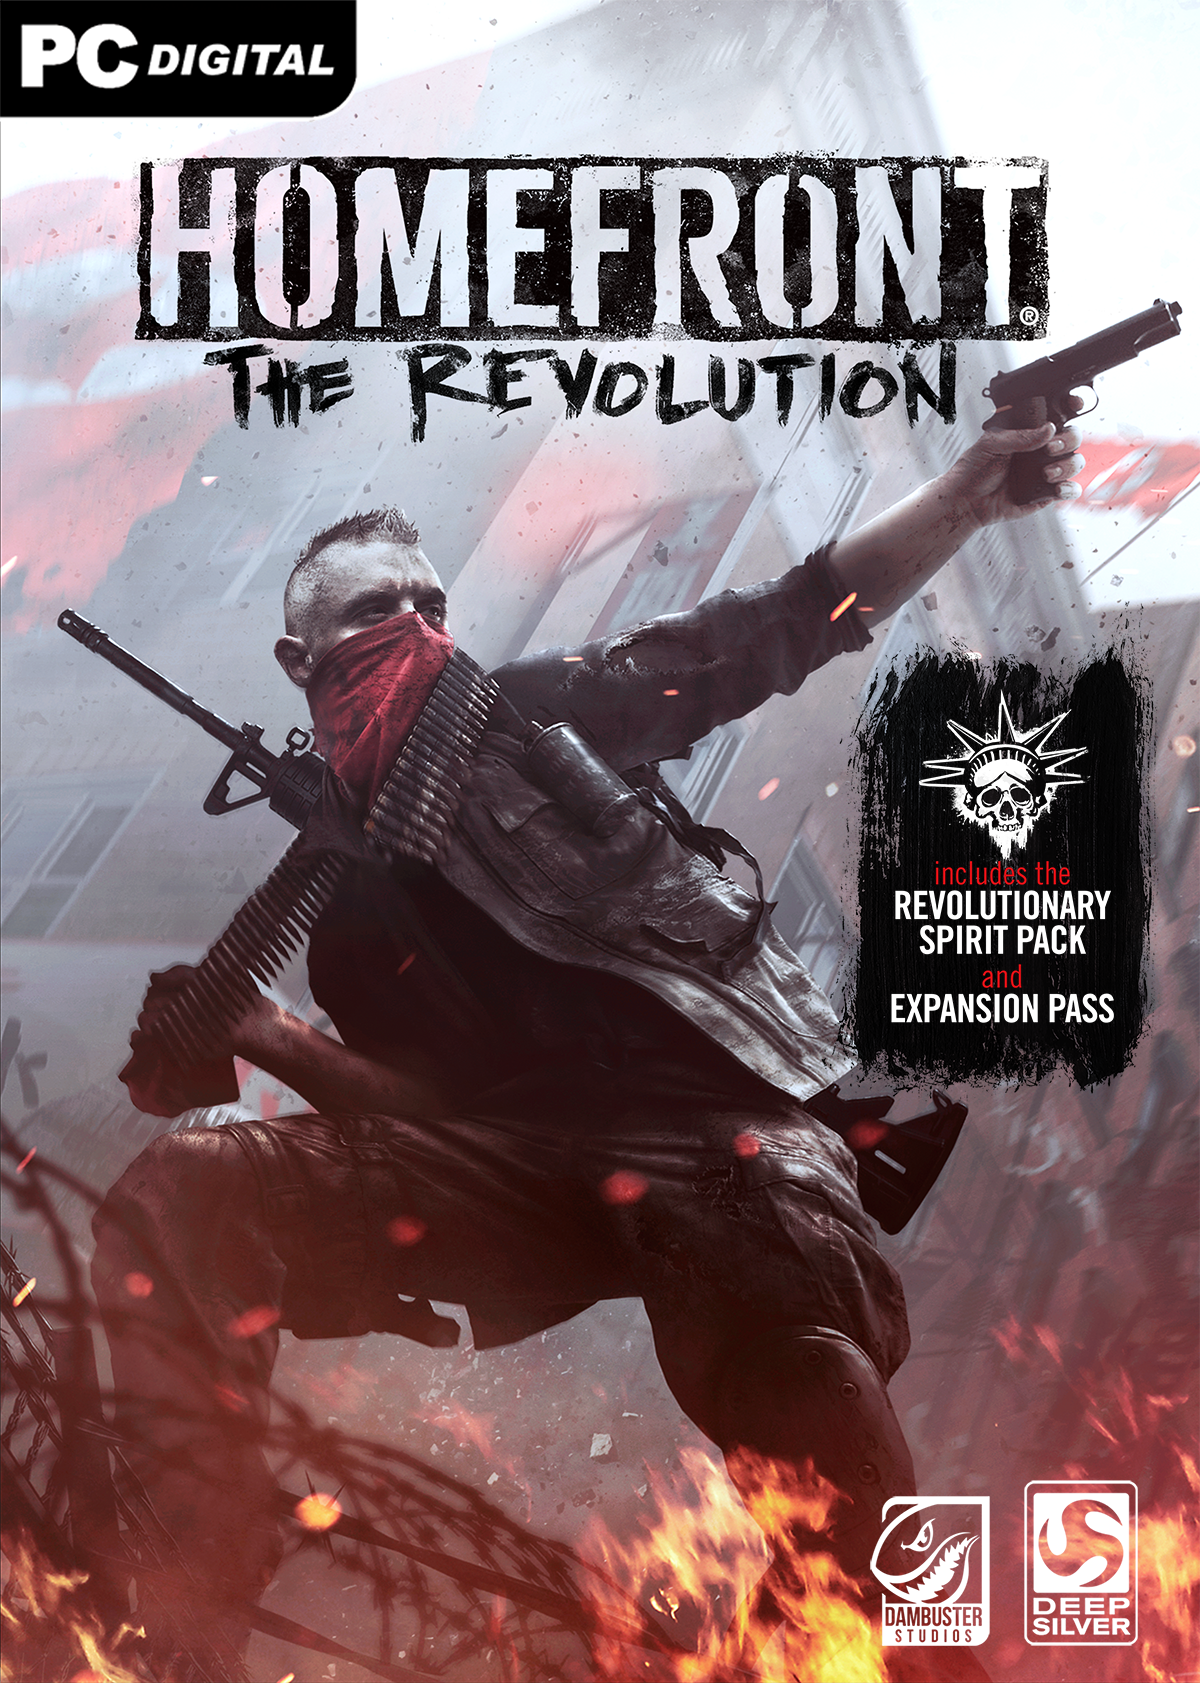 Homefront: The Revolution Freedom Fighter Bundle